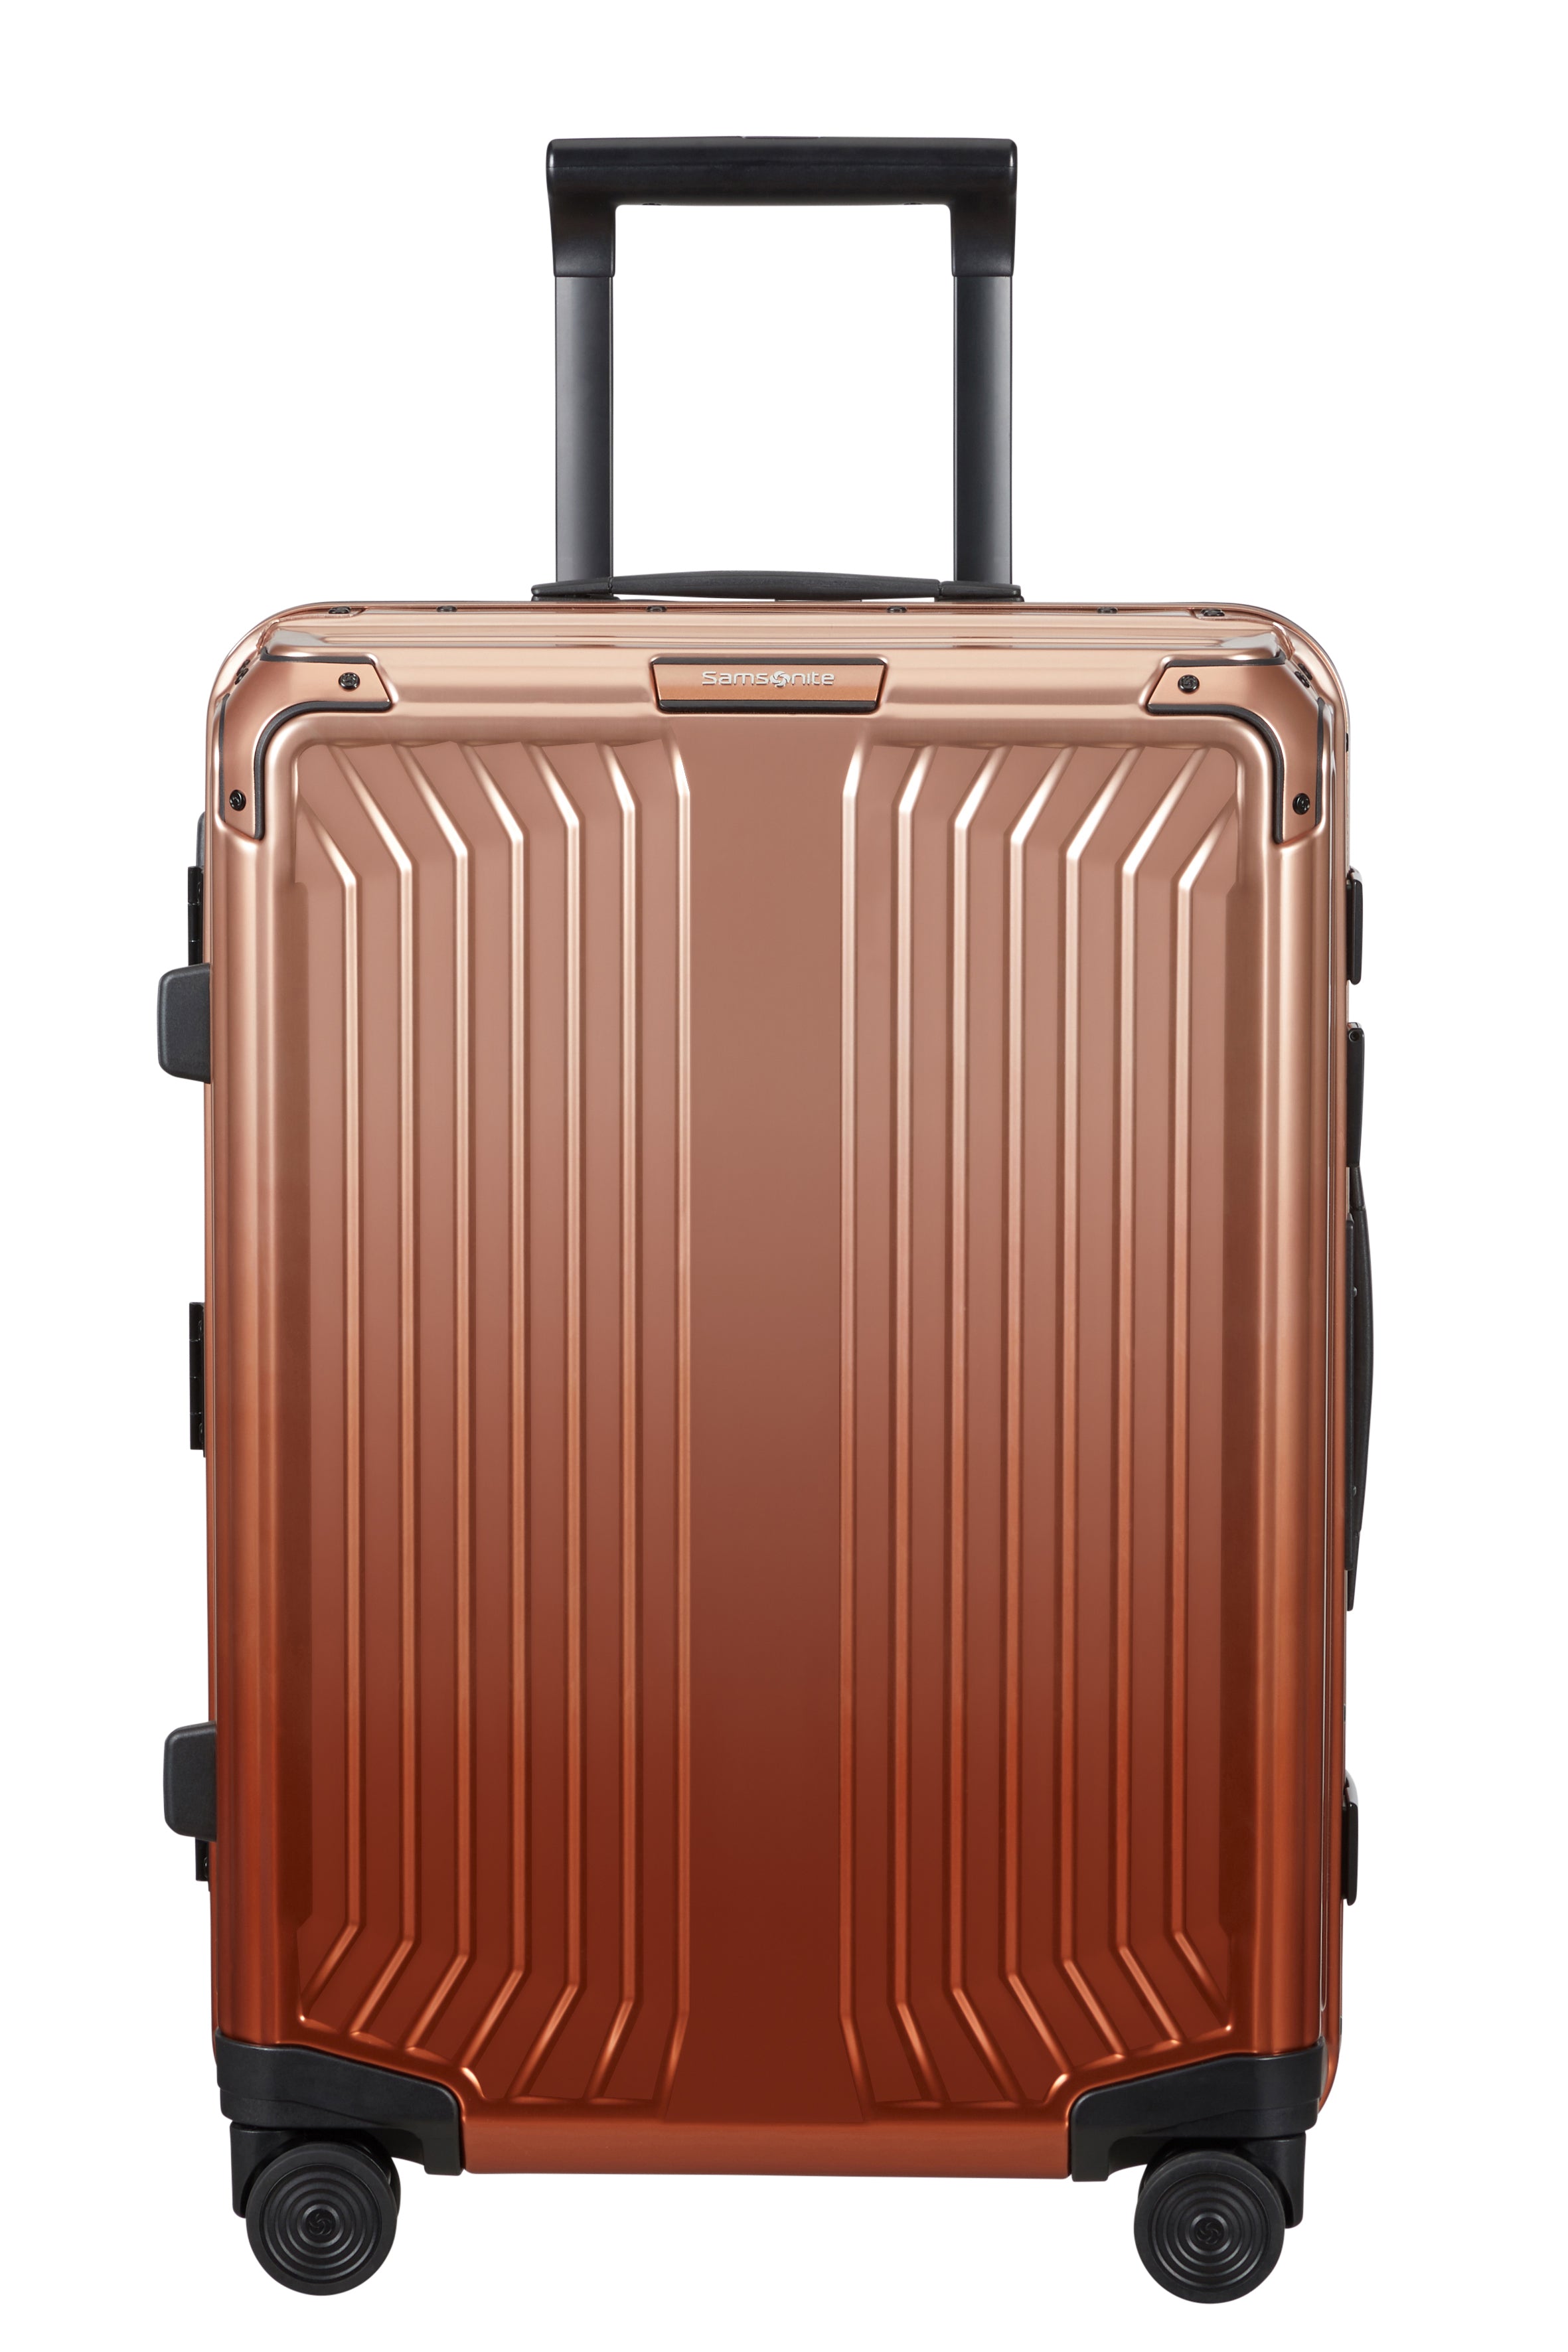 Samsonite - Lite Box ALU 55cm Small 4 Wheel Hard Suitcase - Gradient Copper - 0